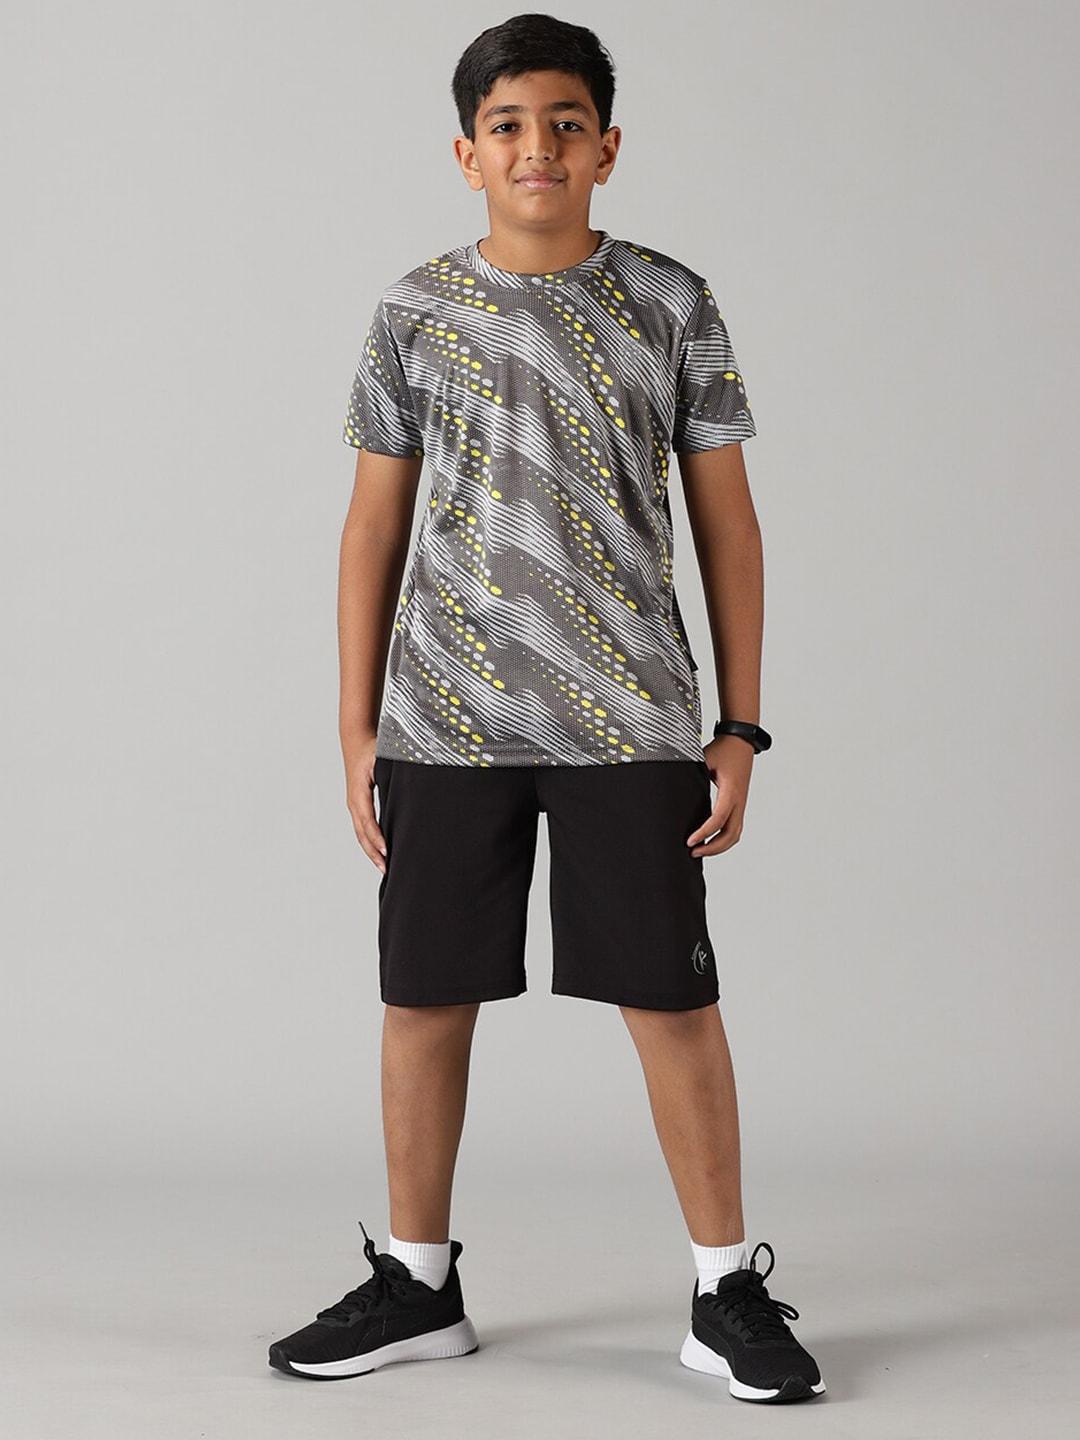 KiddoPanti Boys Printed Short Sleeves Sports T-shirt with Shorts Clothing Set